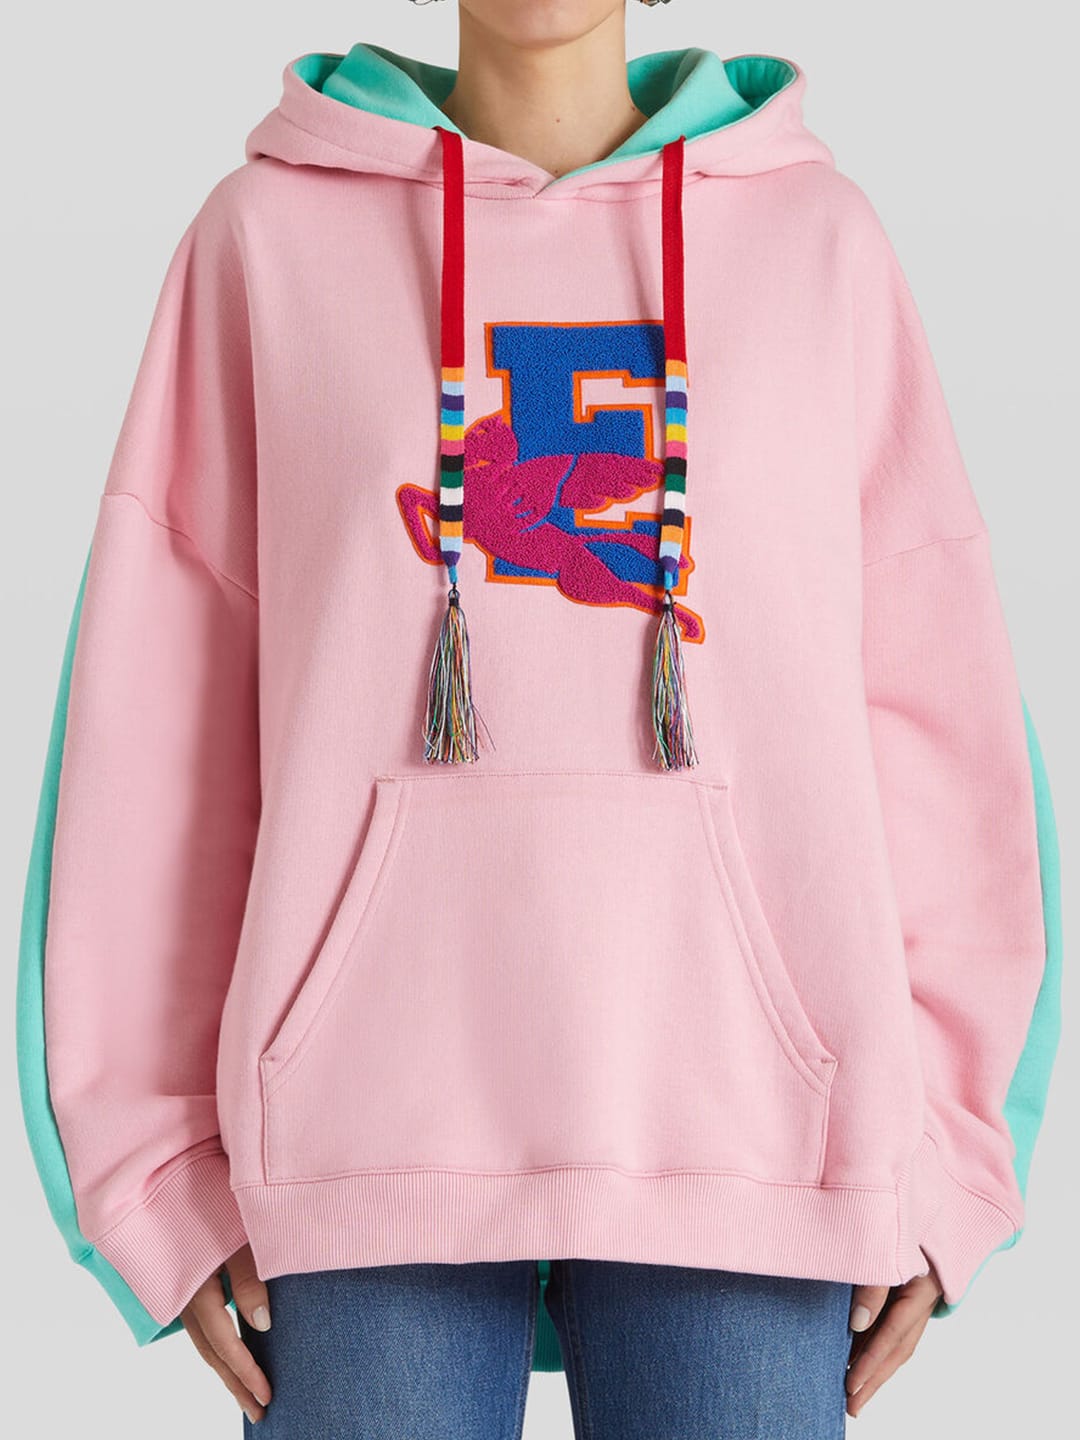 Etro bicolor hoodie with pegaso